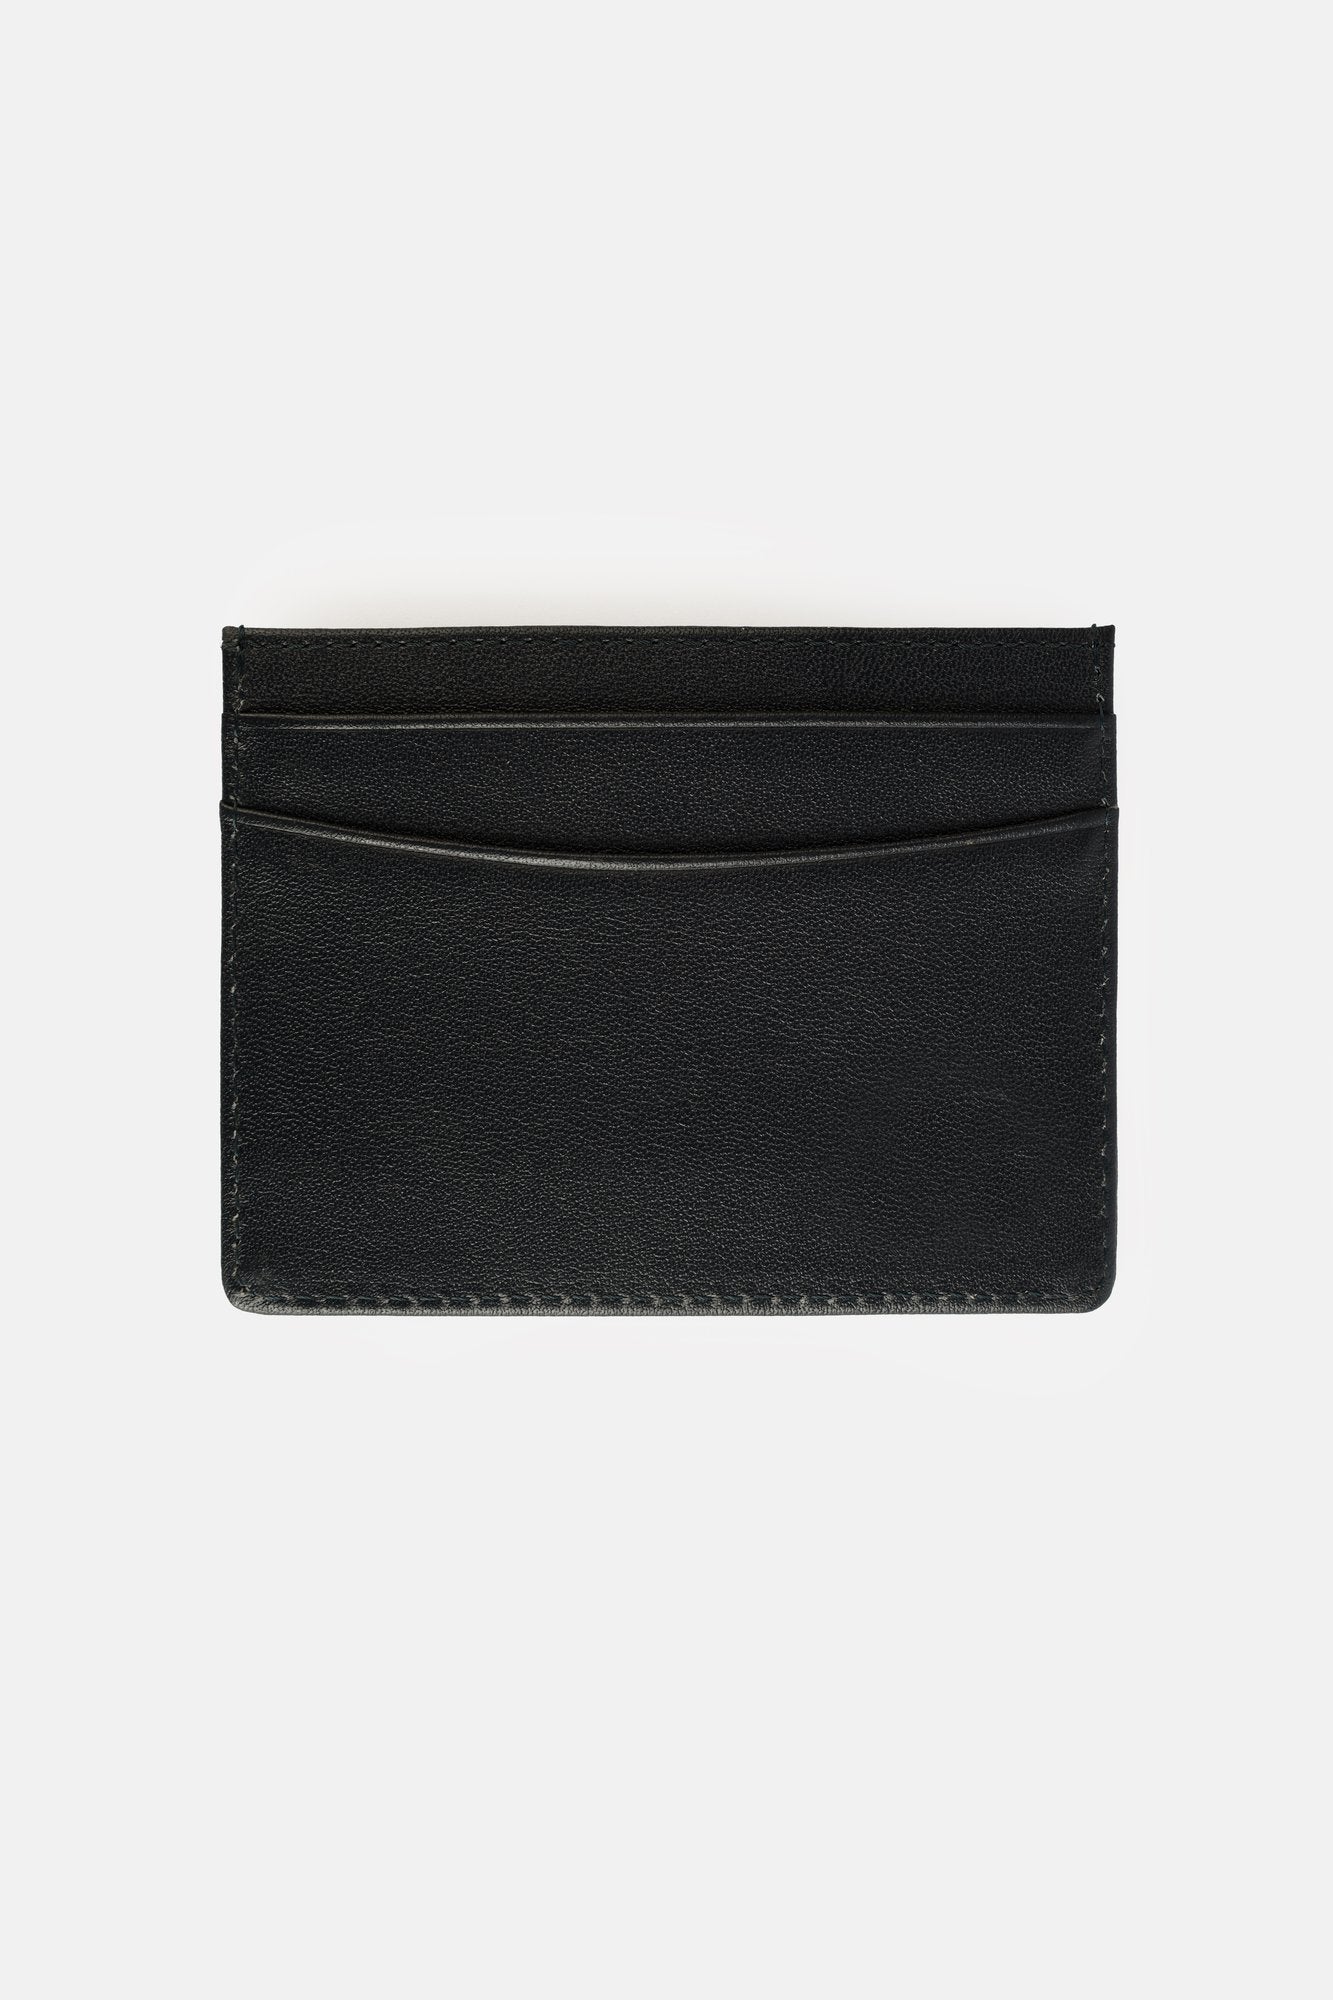 Solid Black Card Case Wallet